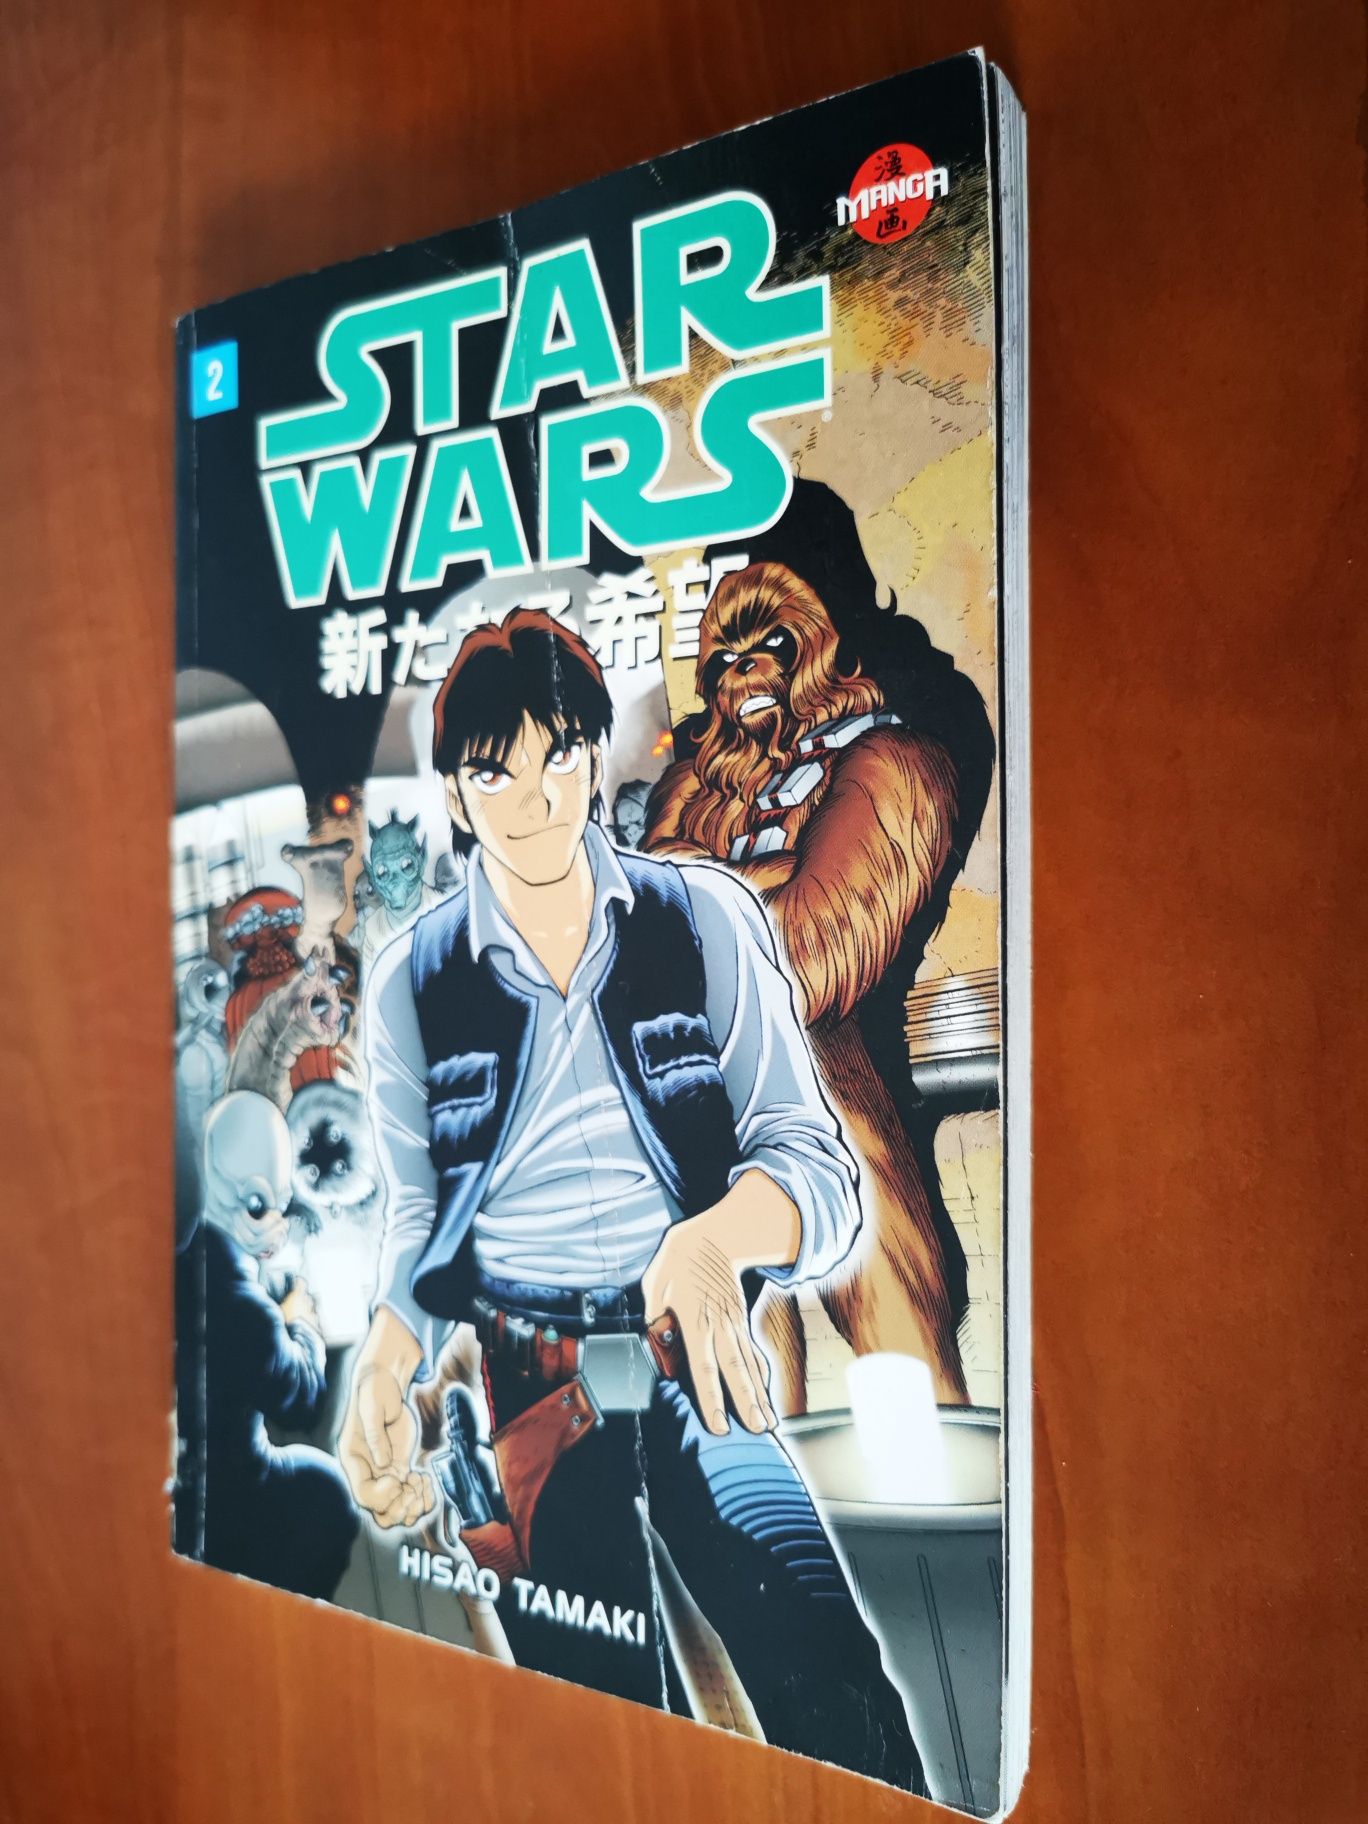 Star Wars a new hope - manga Hisao Tamaki